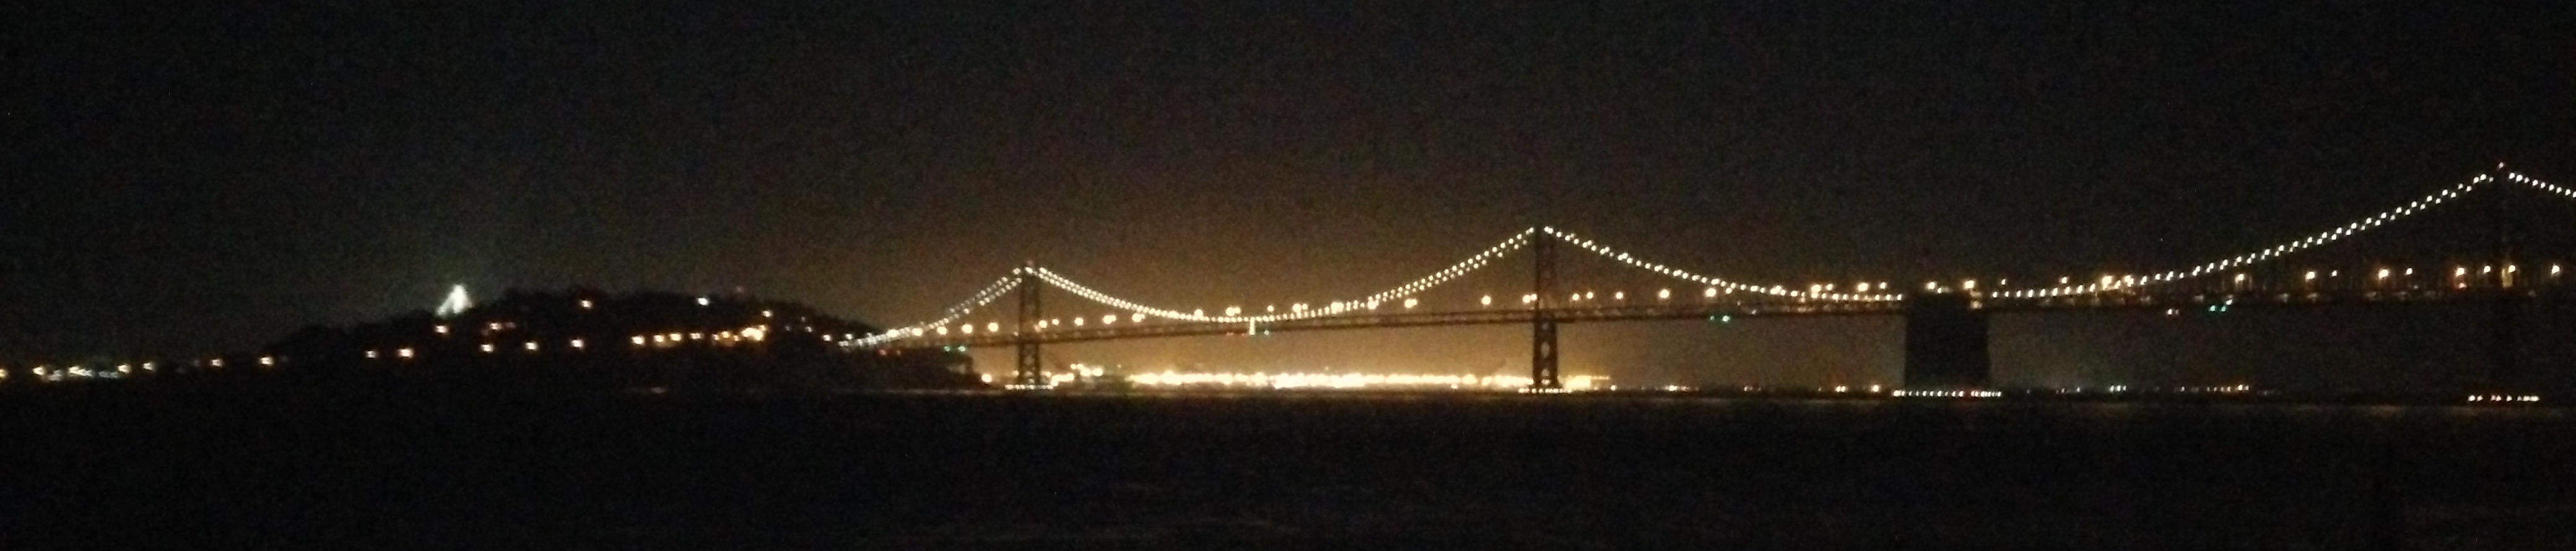 Bridge at Night from Alcatraz